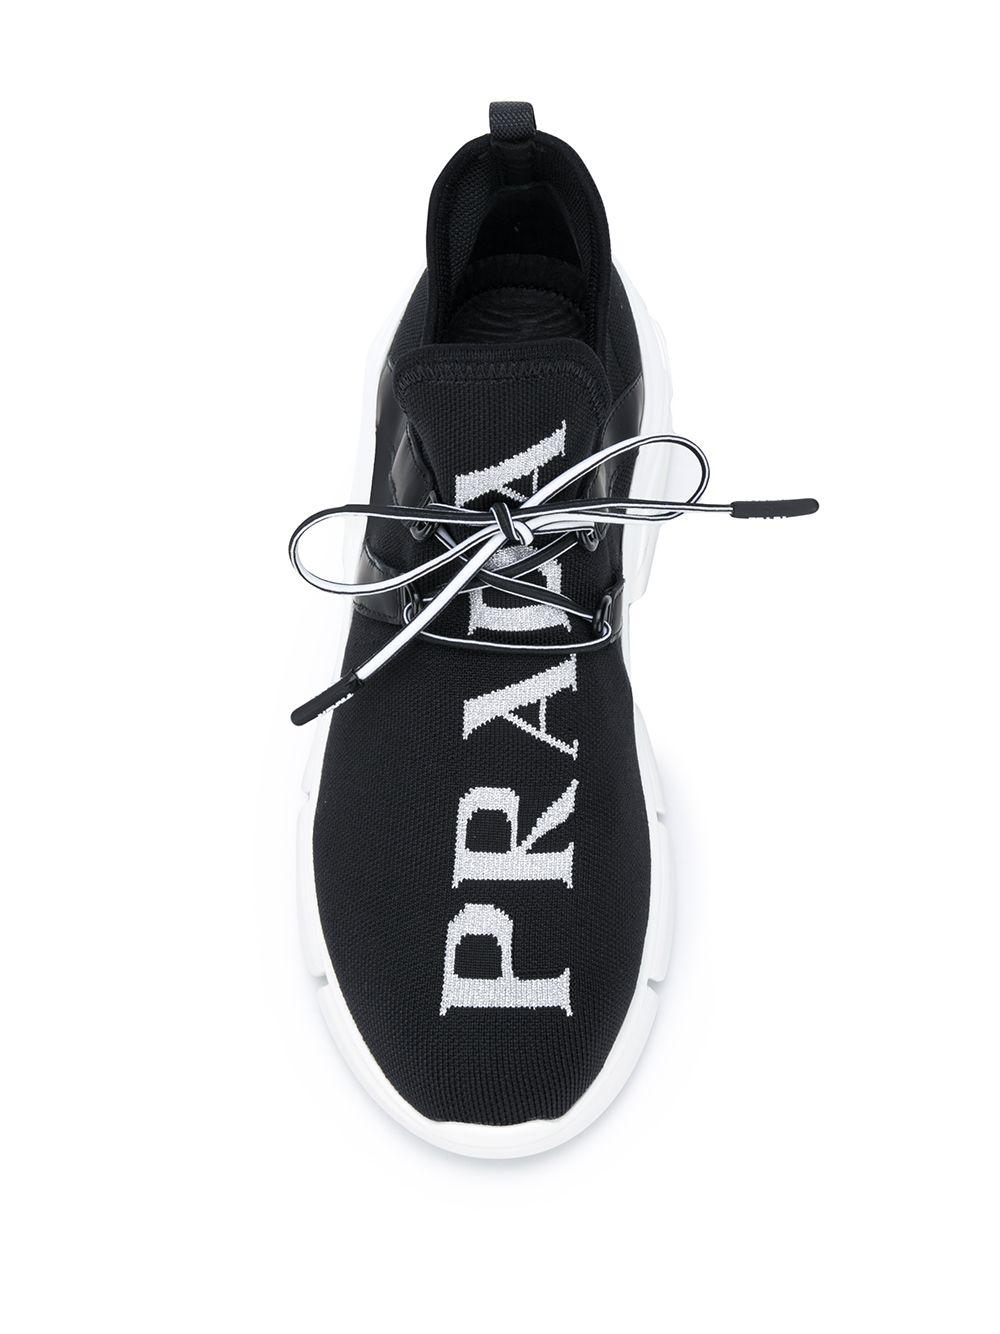 Prada Logo Knit Sneakers in Black - Save 62% - Lyst